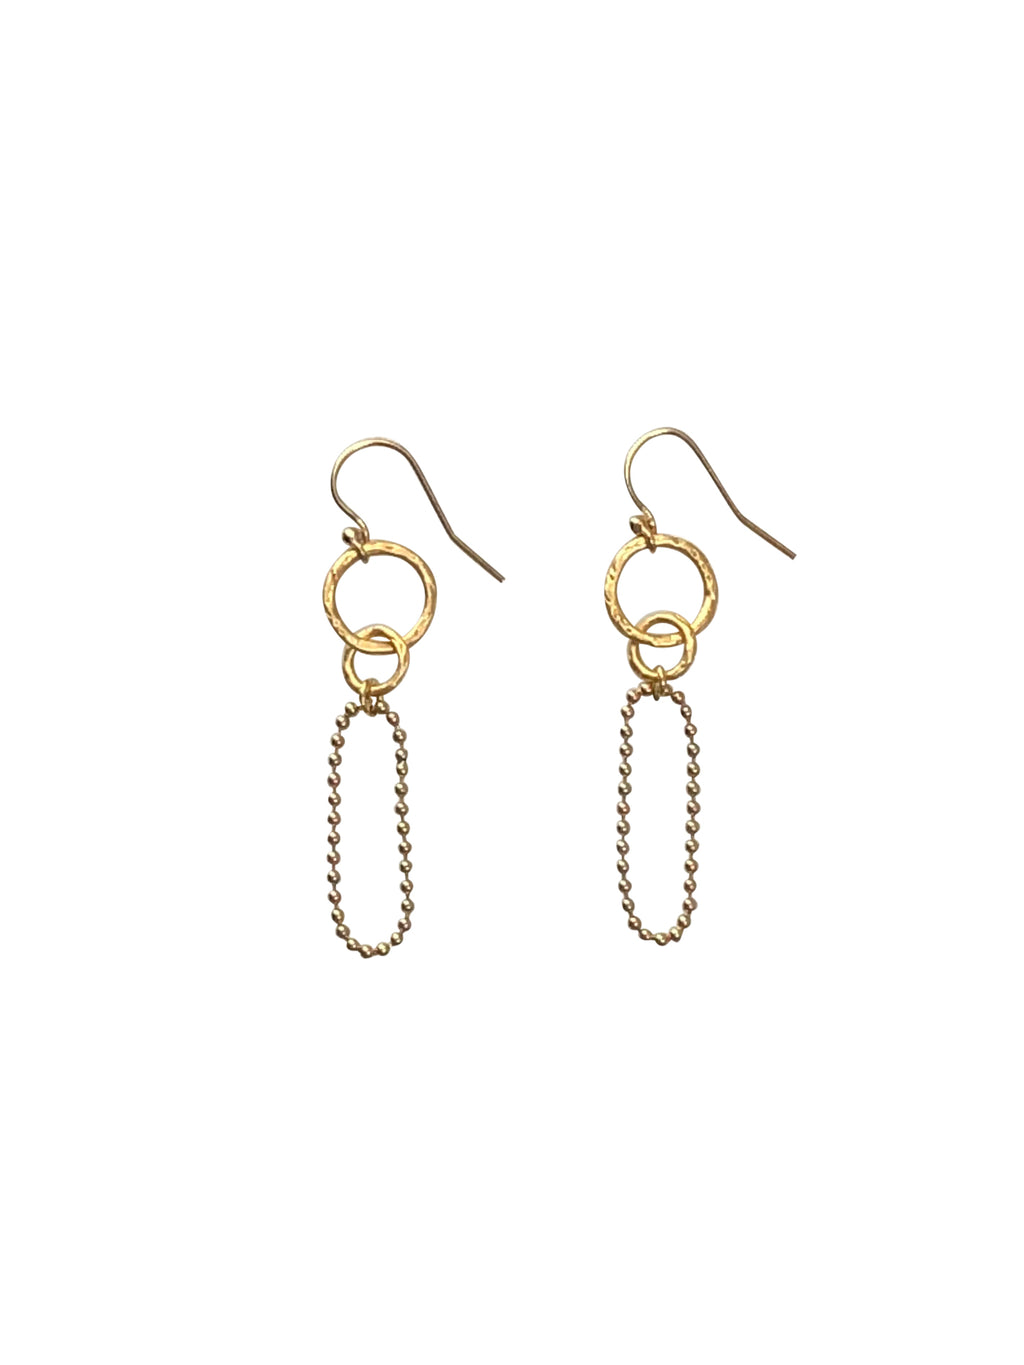 earrings goldfilled oorbellen hangers